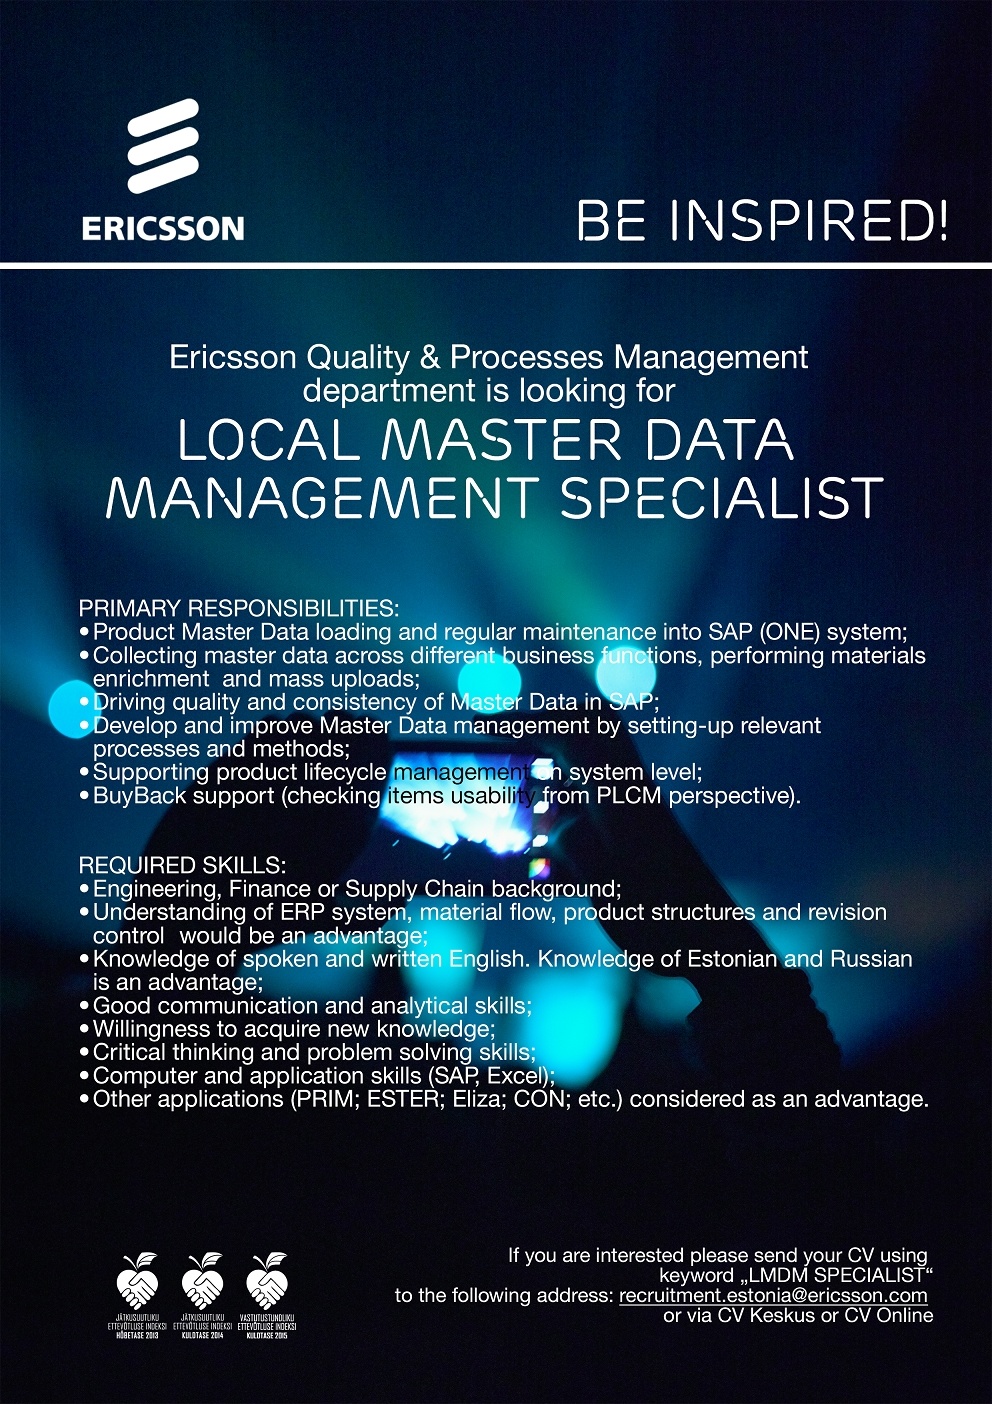 Ericsson Eesti AS Local Master Data Management Specialist